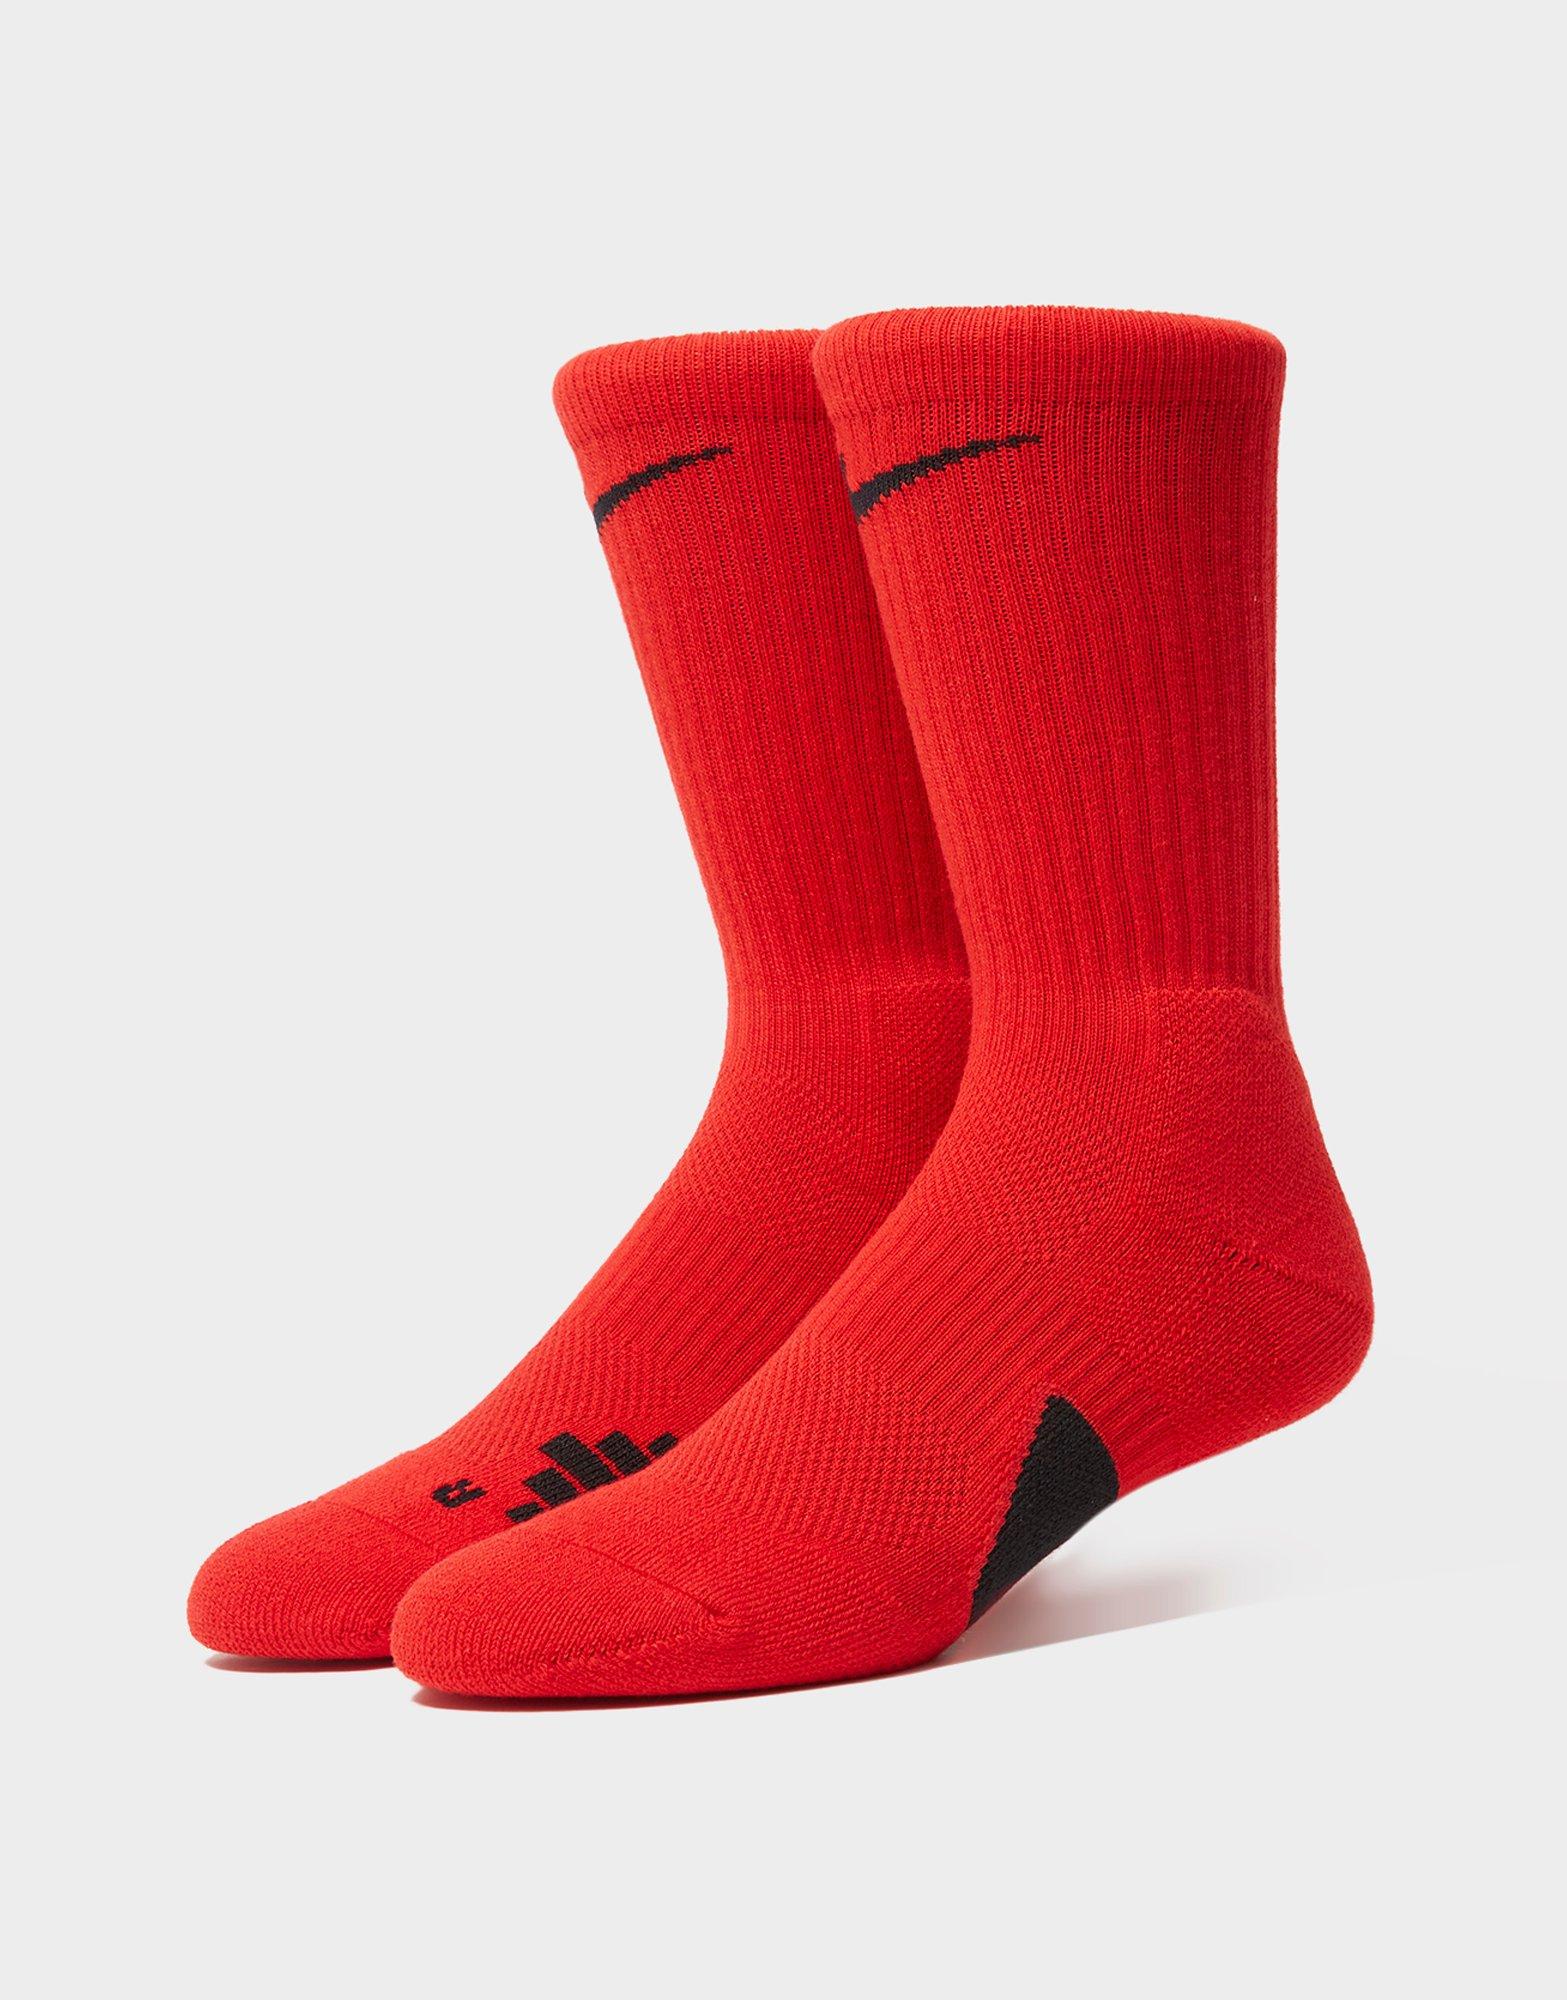 Red Nike Elite Crew Basketball Socks 